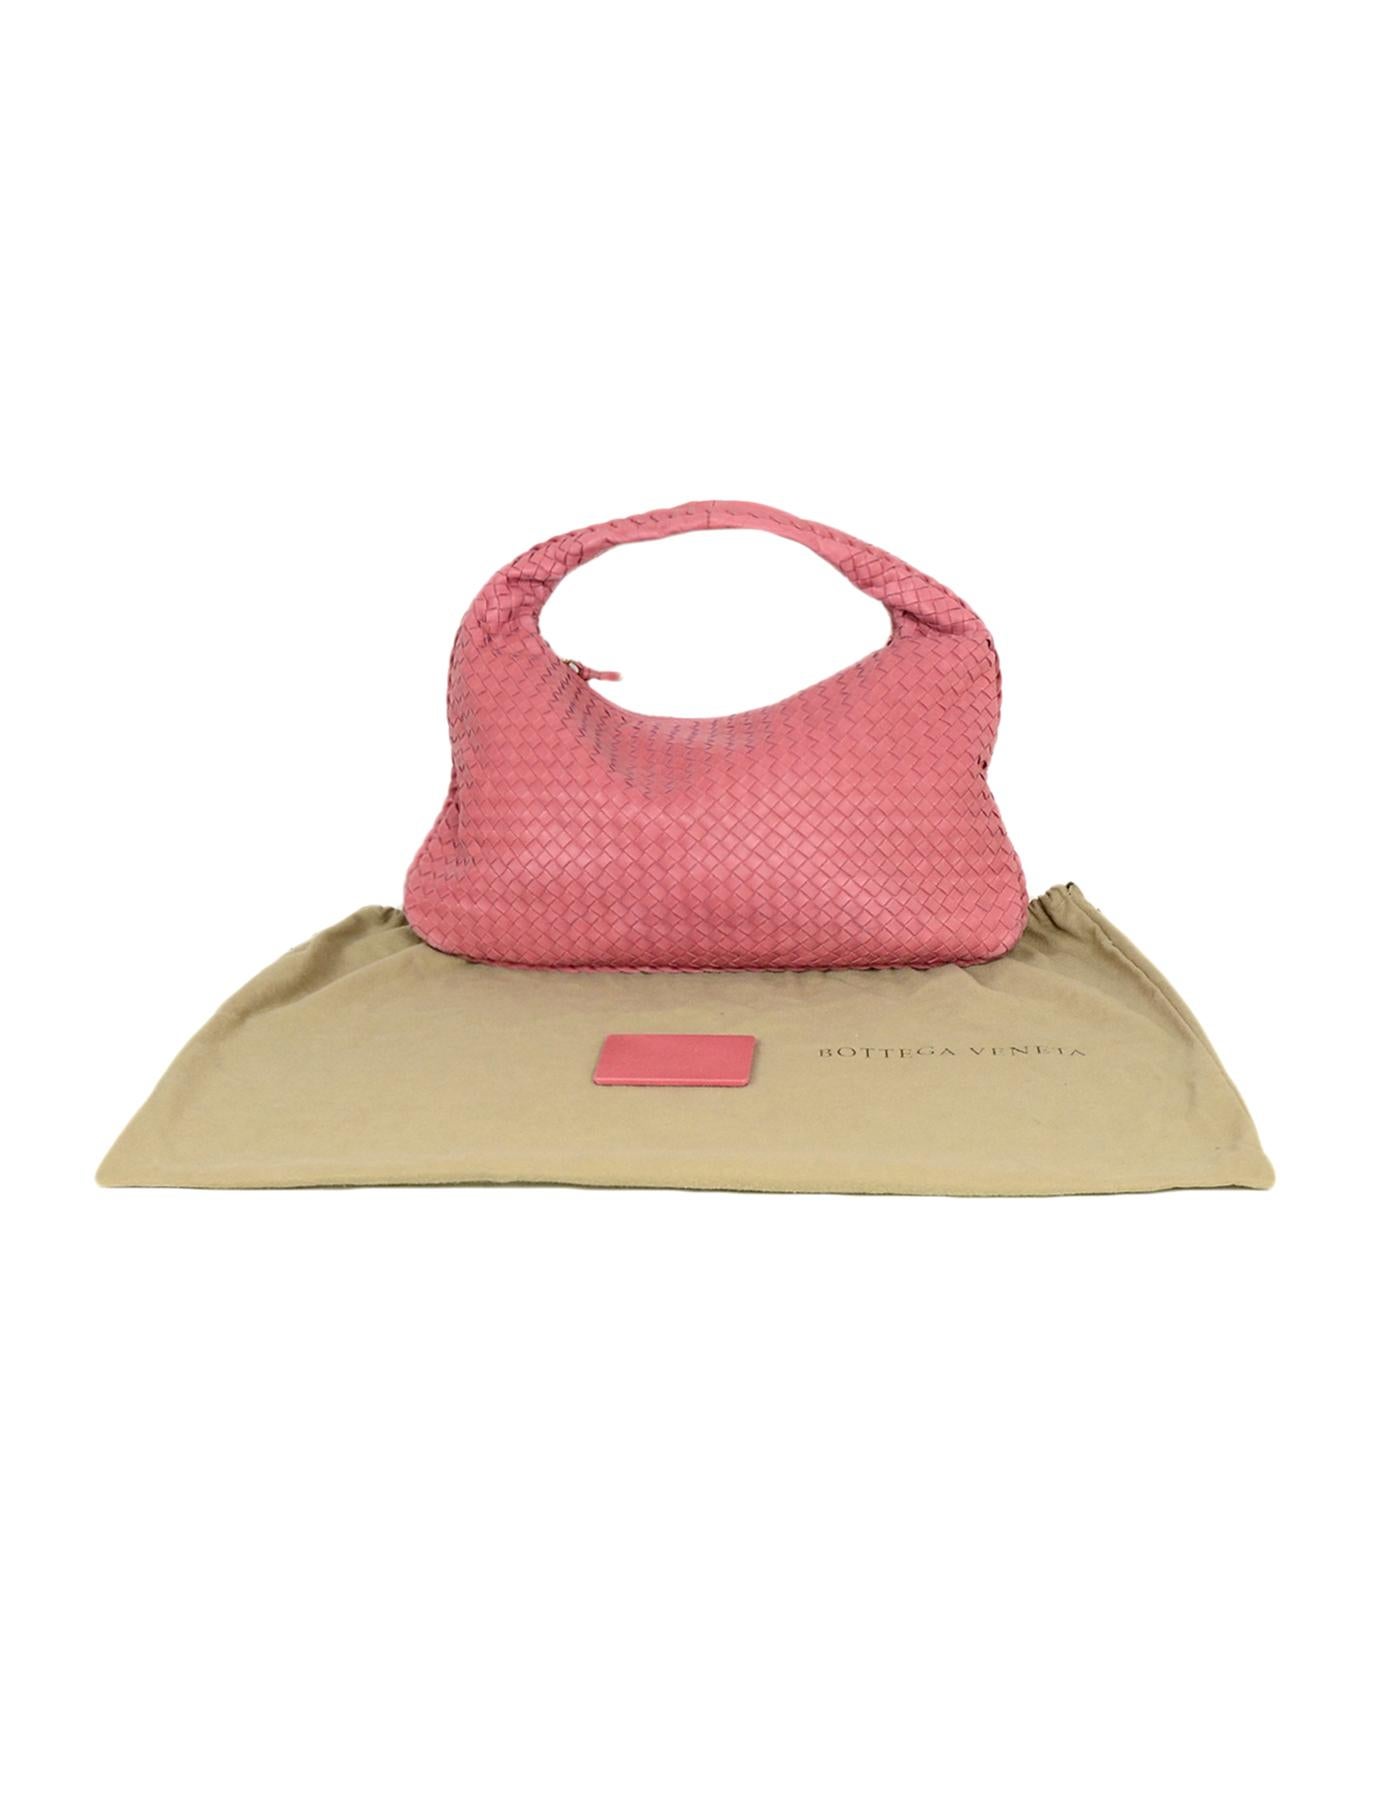 Bottega Veneta Rose Pink Nappa Intrecciato Woven Leather Large Hobo Bag 4